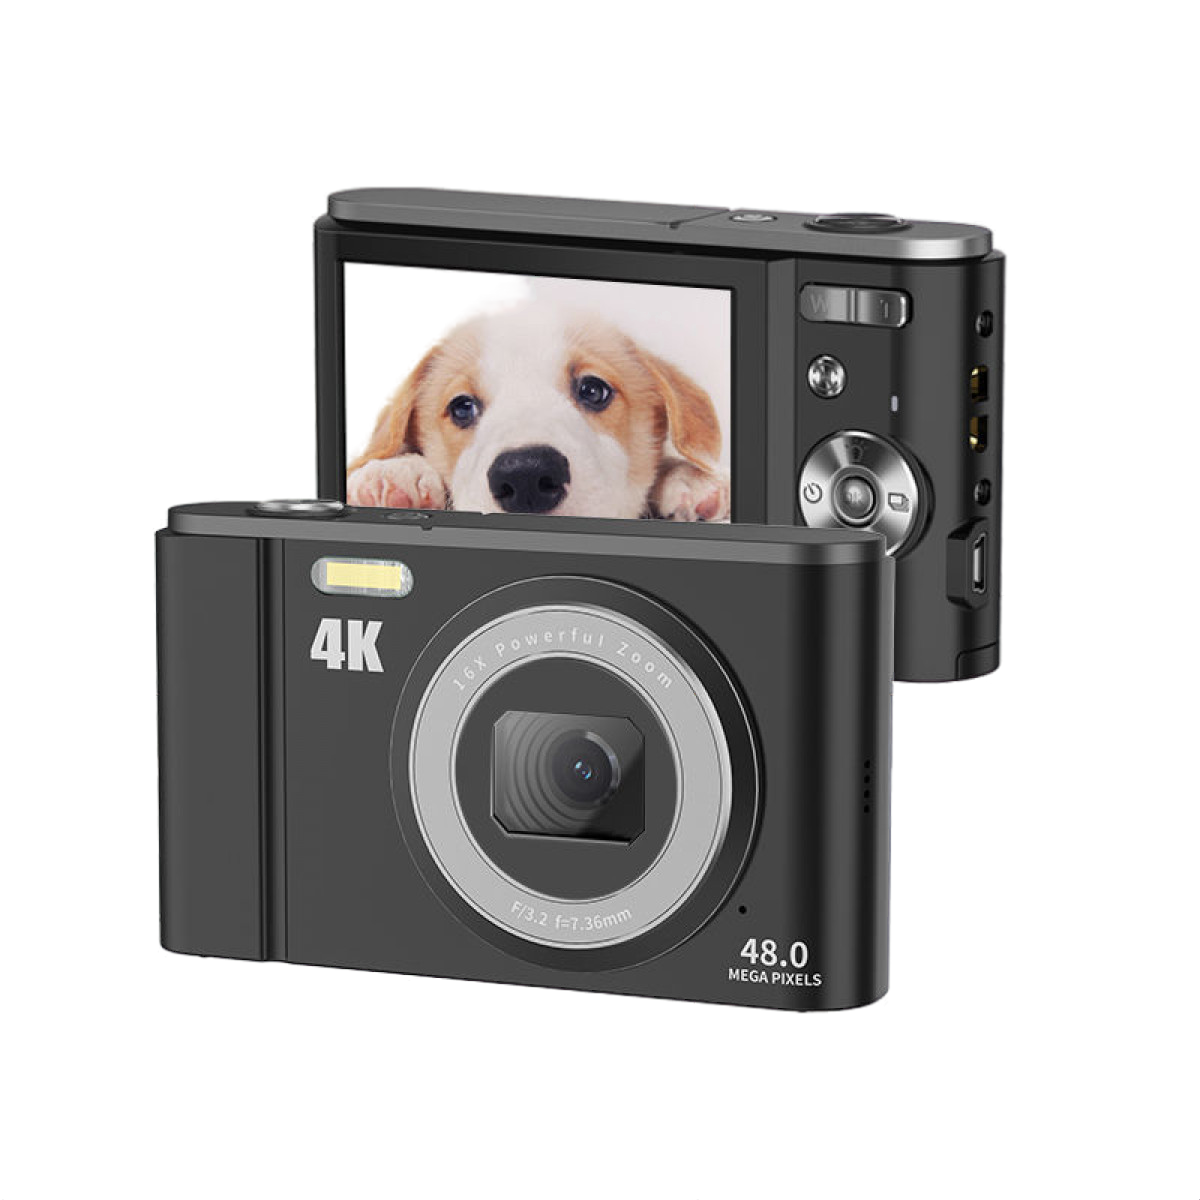 Digitalkamera Video Zoom INF schwarz- Digitalkamera 16x 4K 48MP